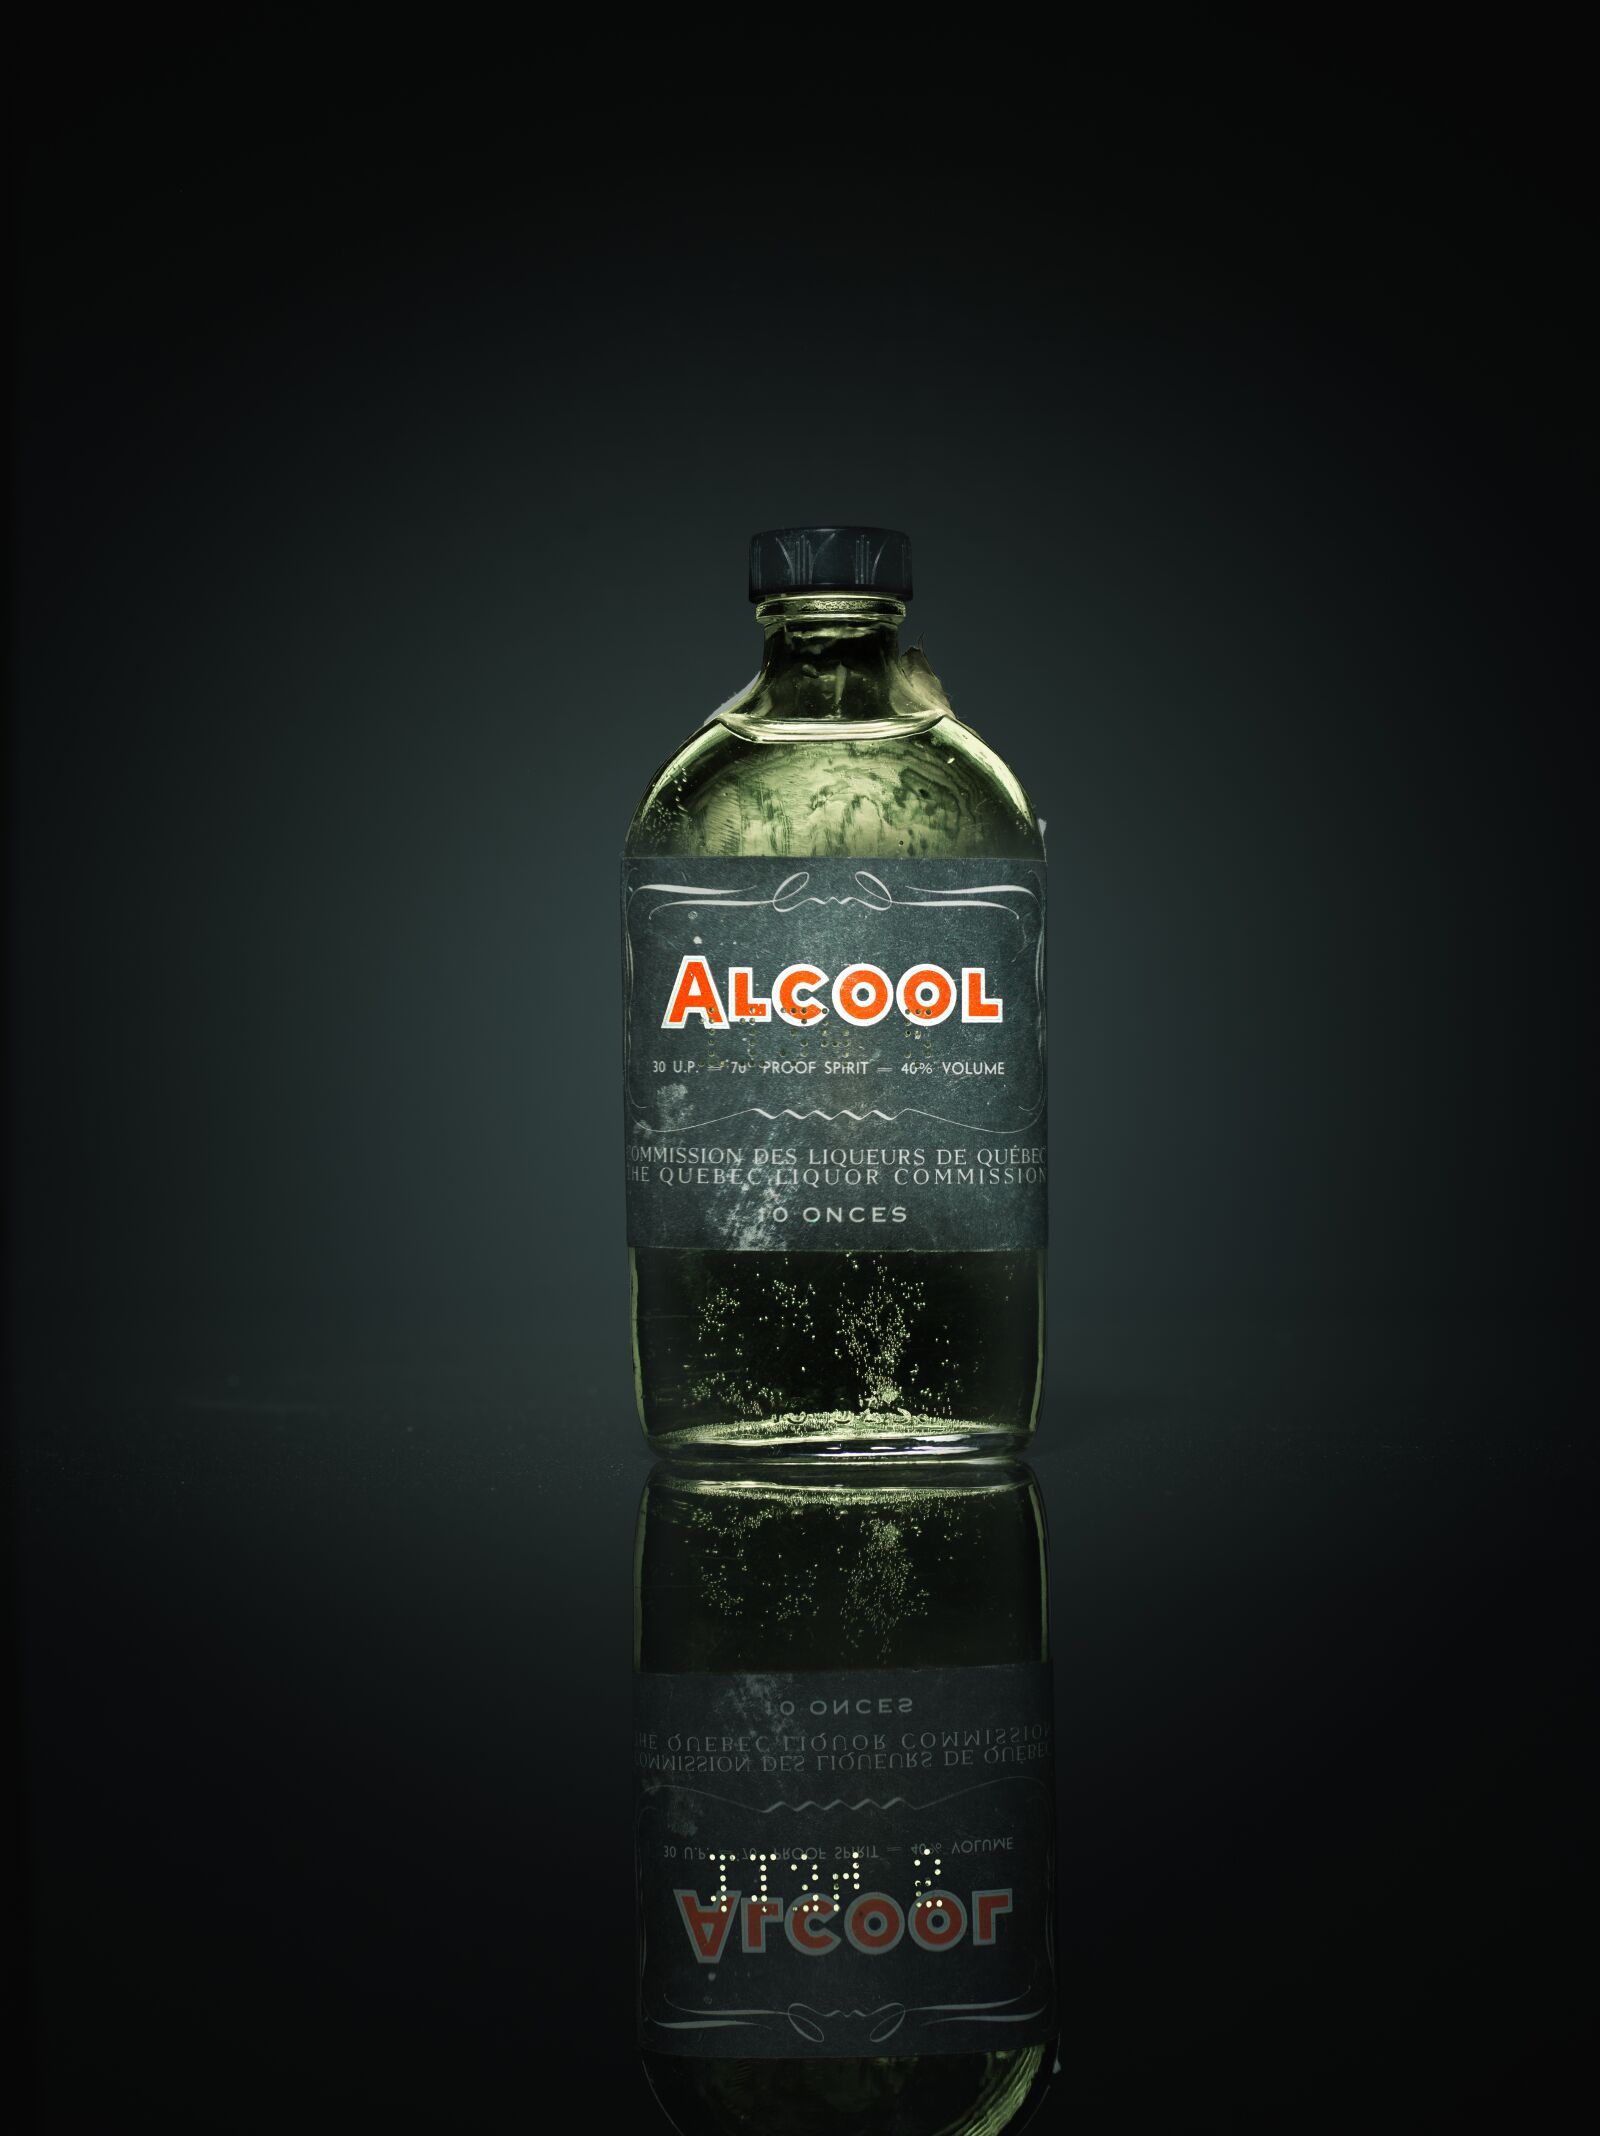 Phase One IQ140 sample photo. Alcool, commission des liqueurs photography